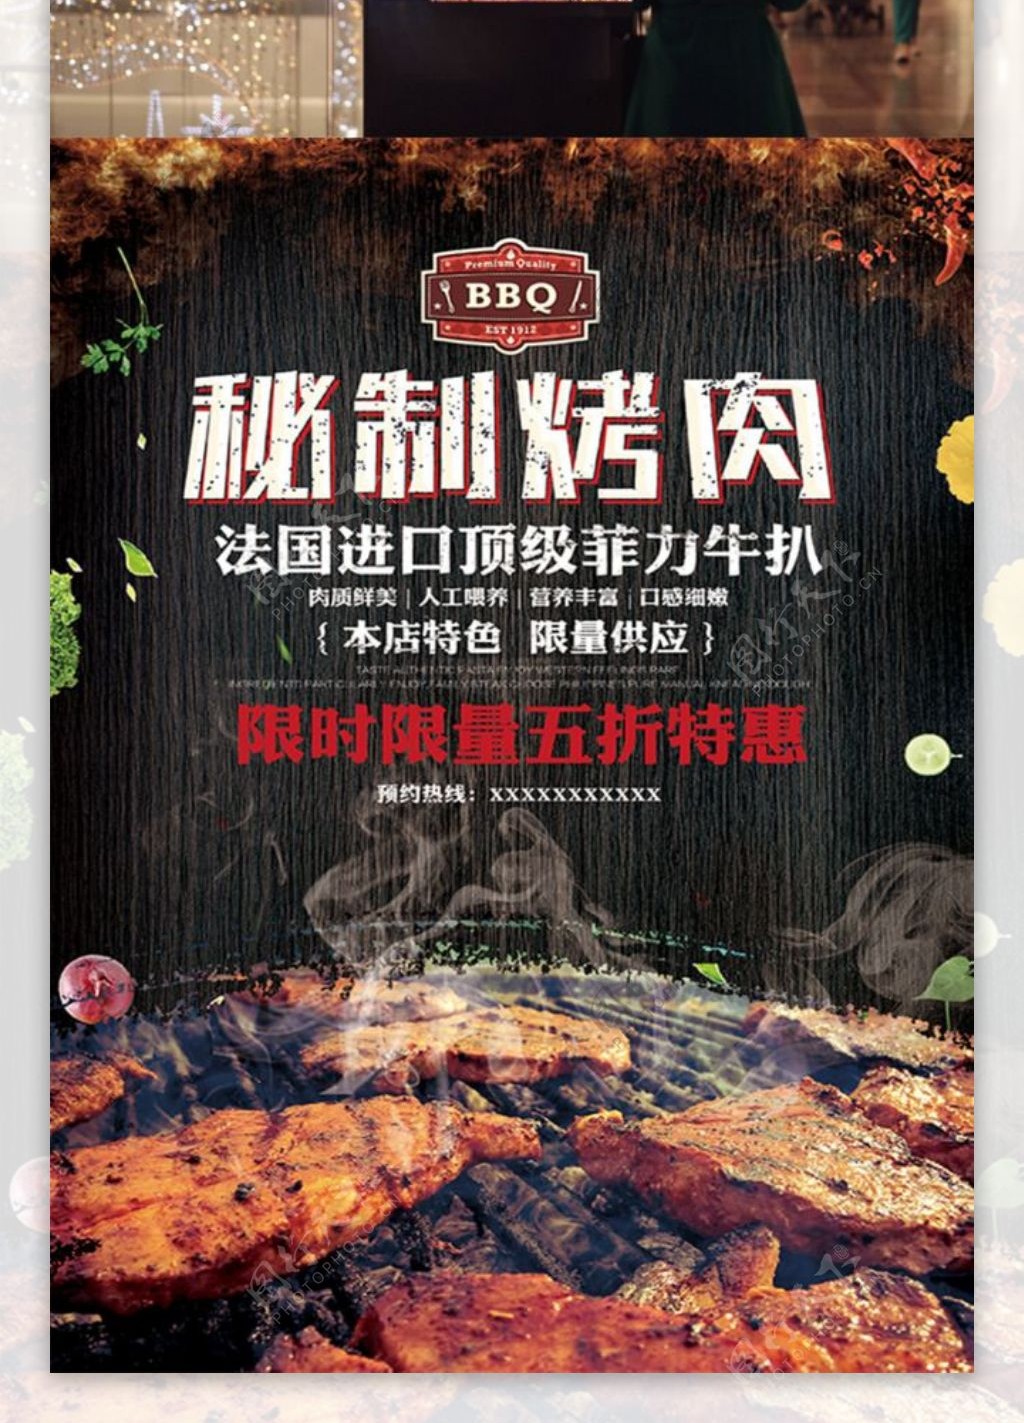 BBQ烧烤烤肉美食促销海报